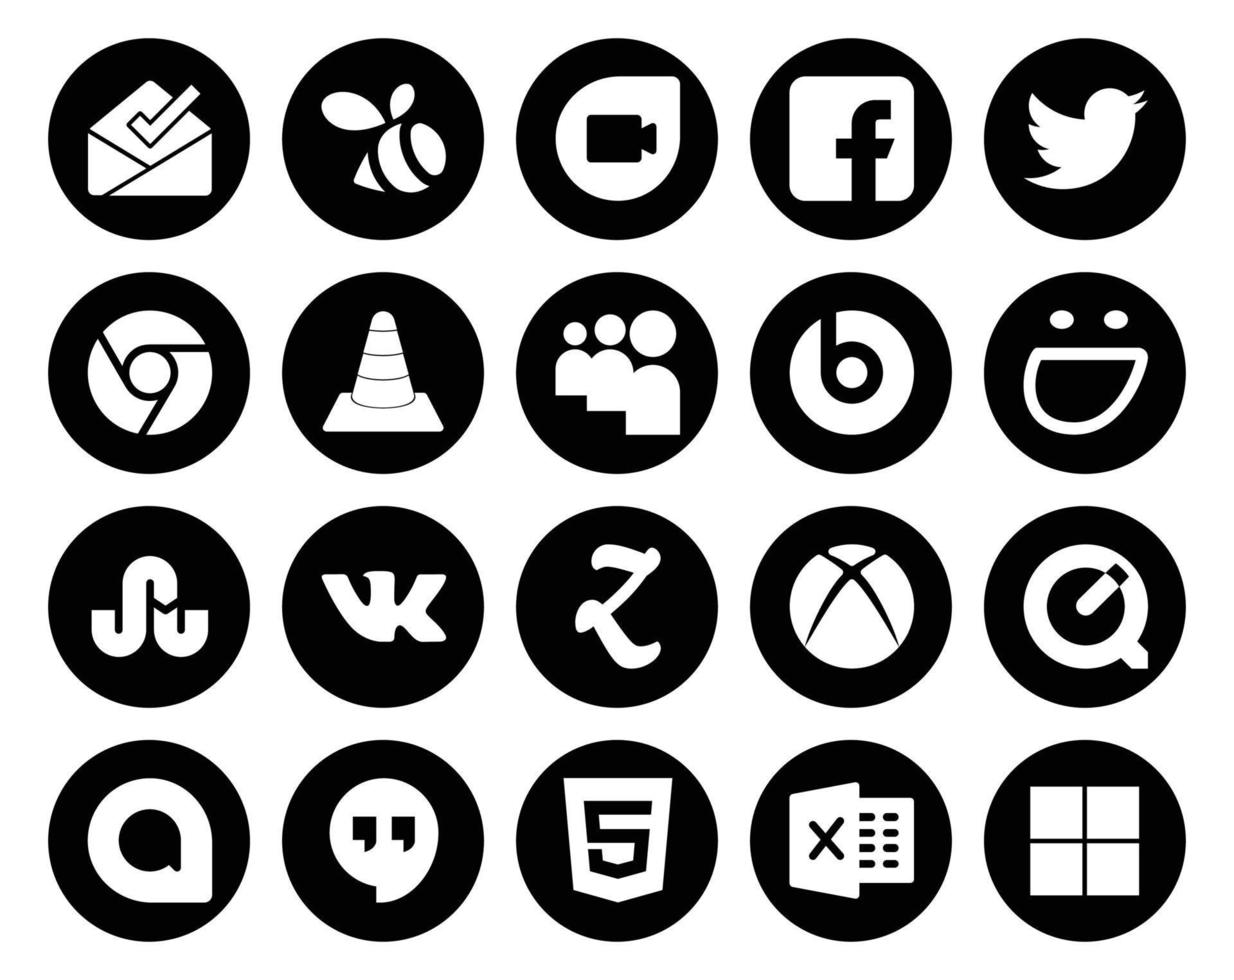 Paquete de 20 íconos de redes sociales que incluye quicktime zootool media vk smugmug vector